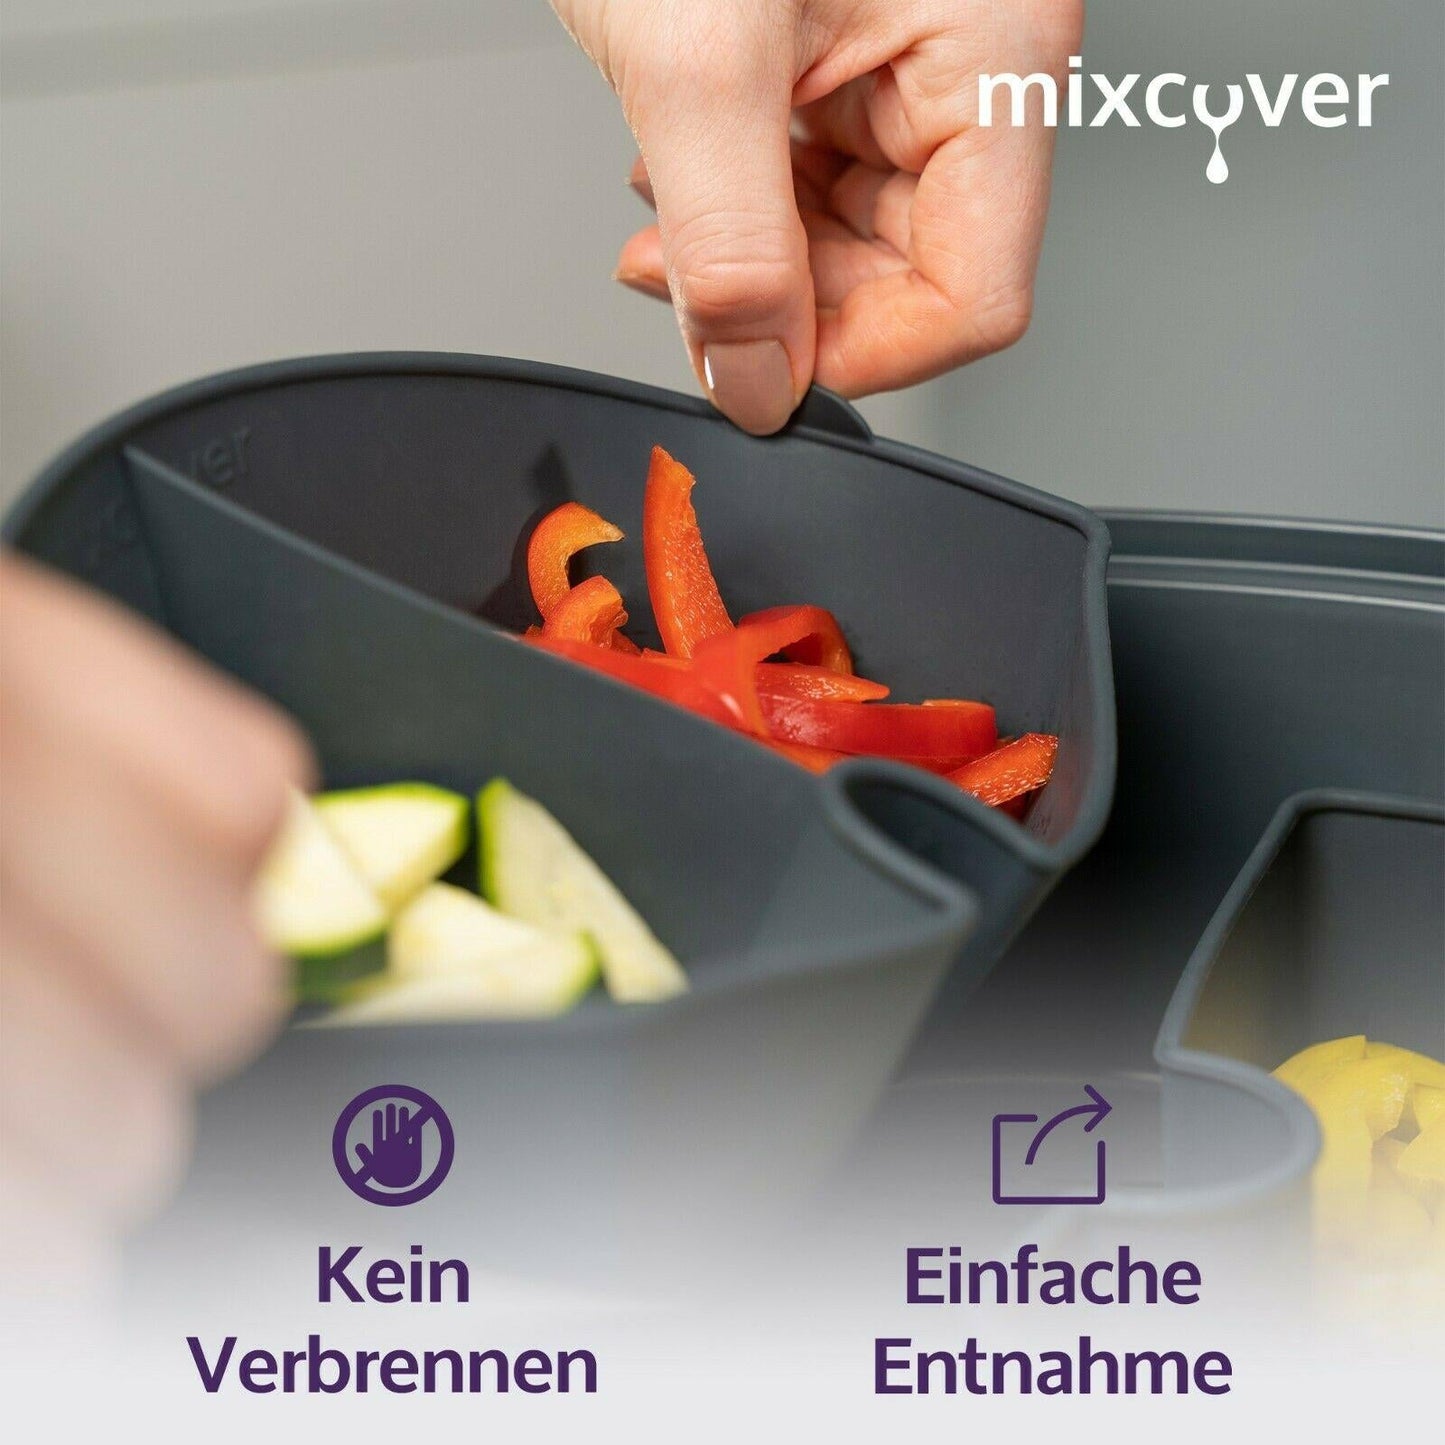 mixcover Garraumteiler (VIERTEL) für Thermomix Varoma Dampfgarraum - Mixcover - Mixcover